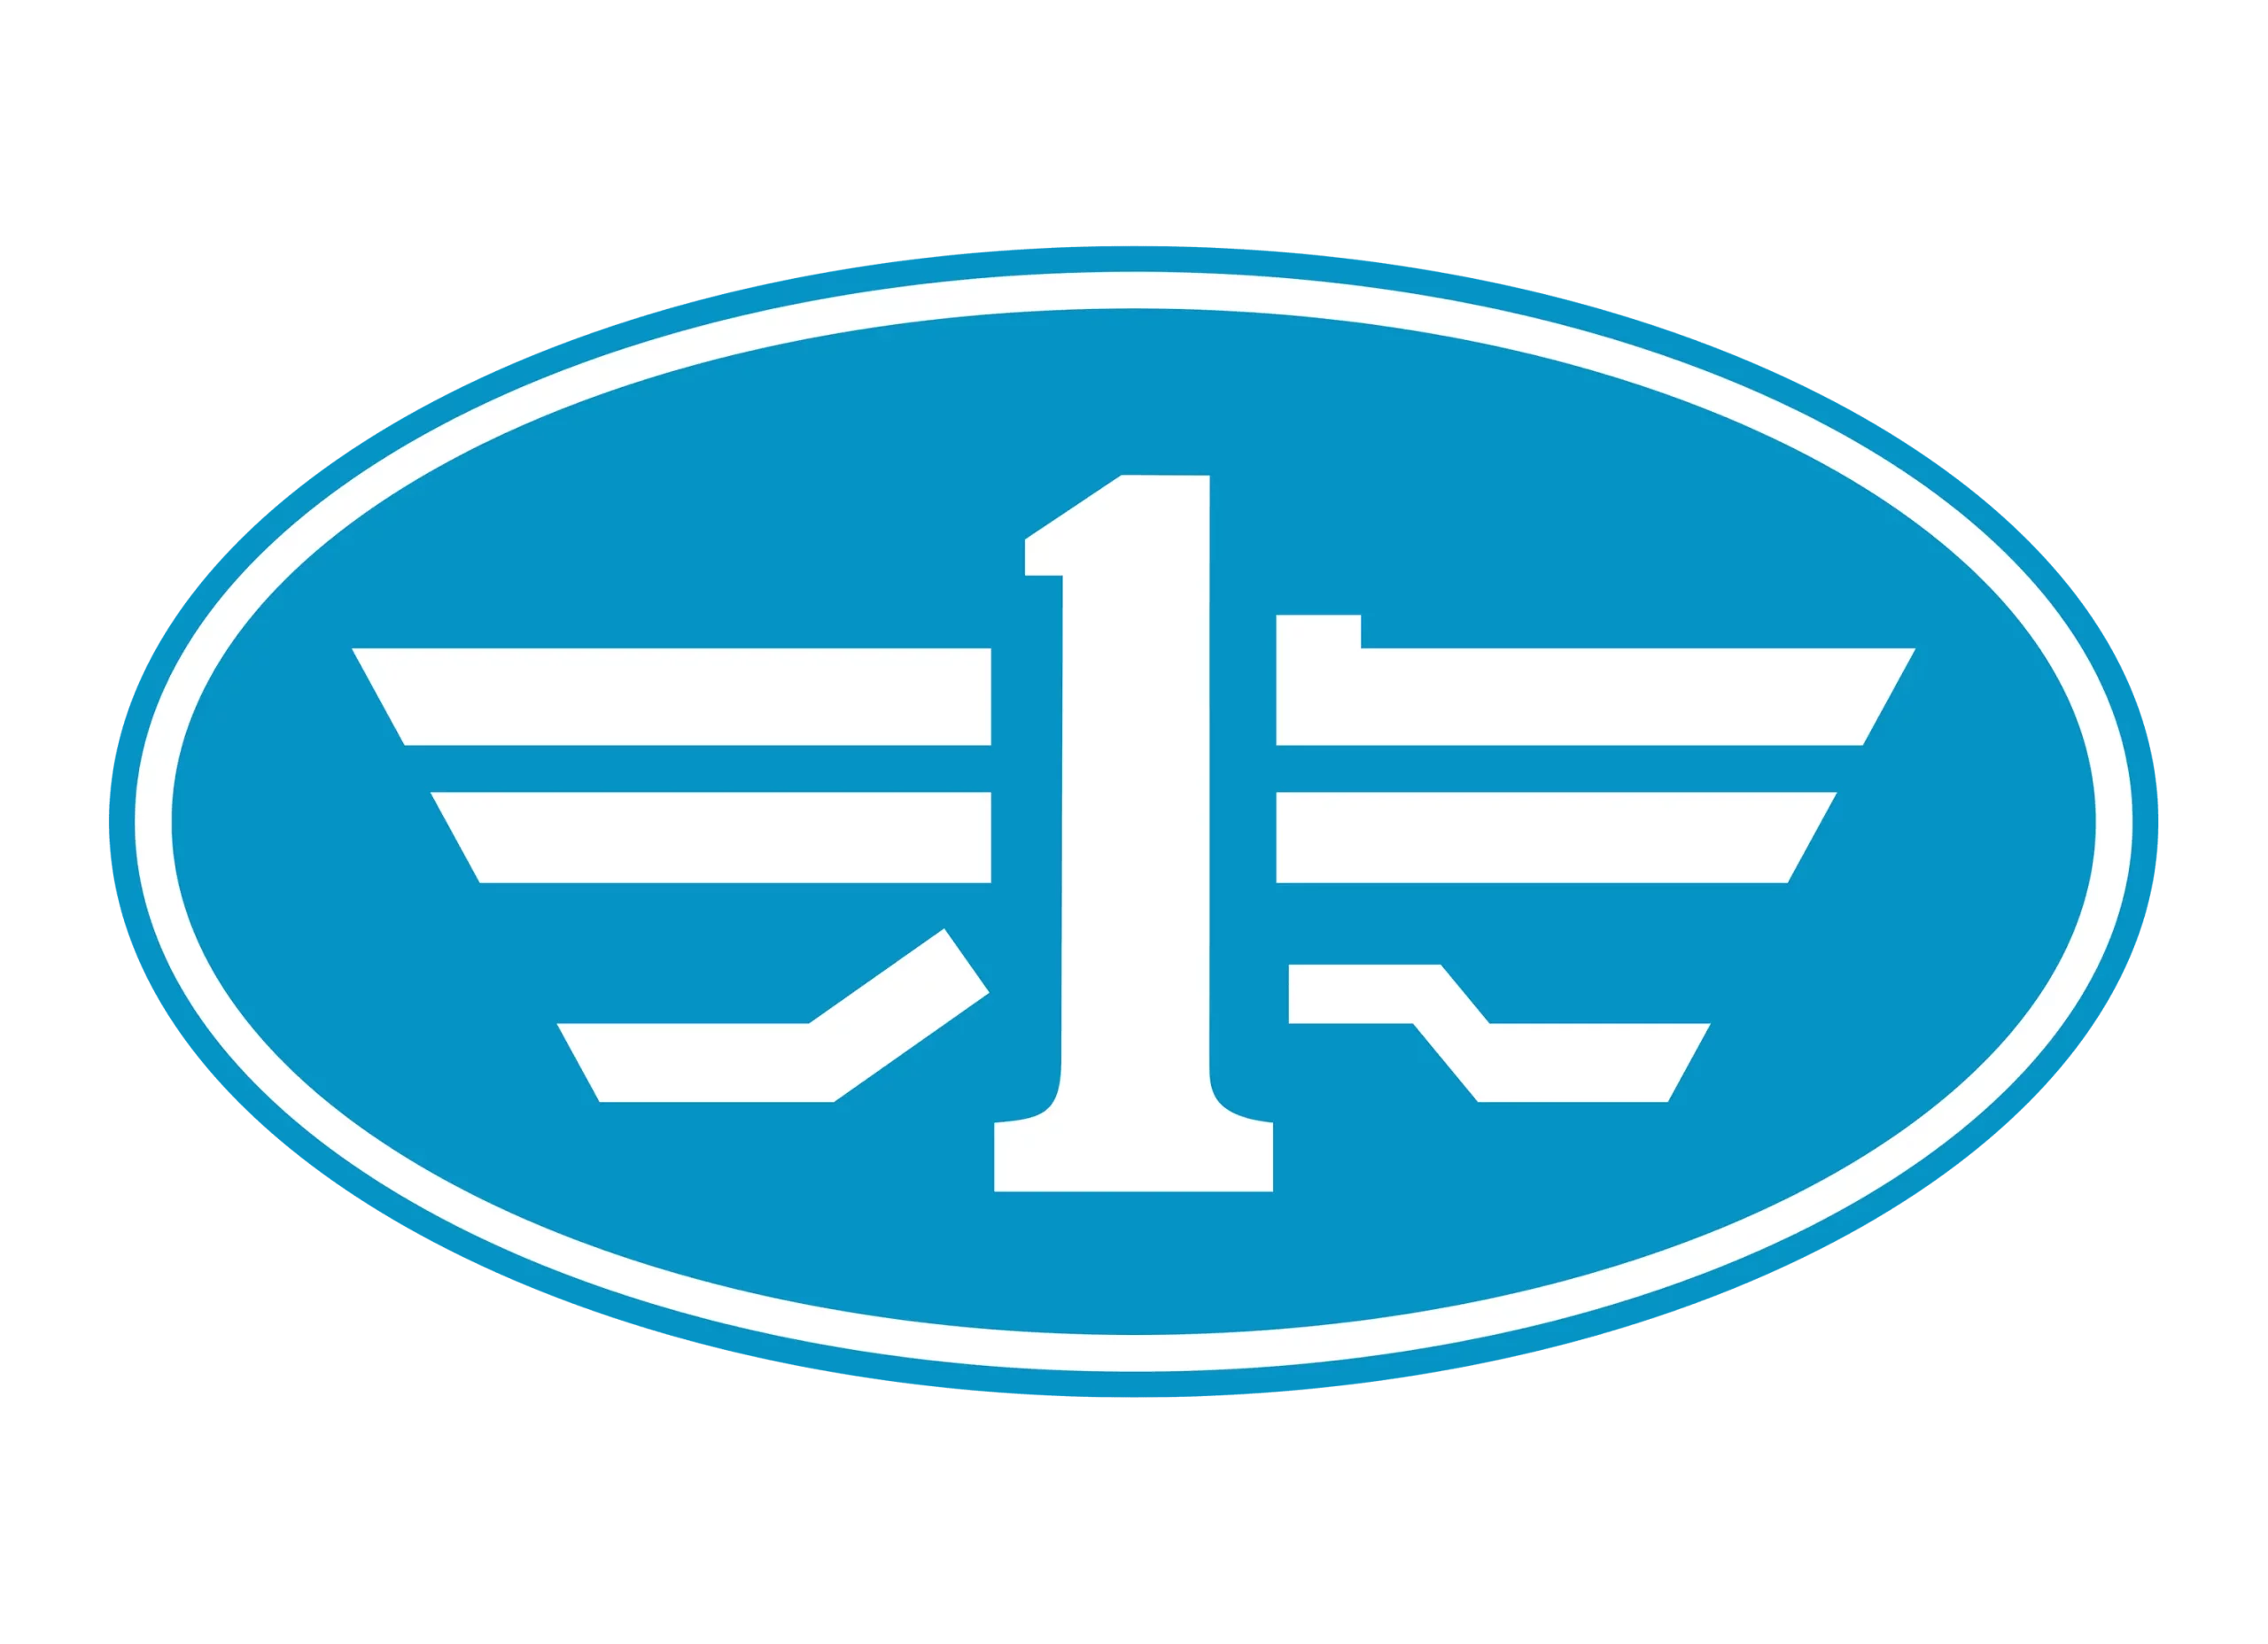 FAW logo 1988-2000